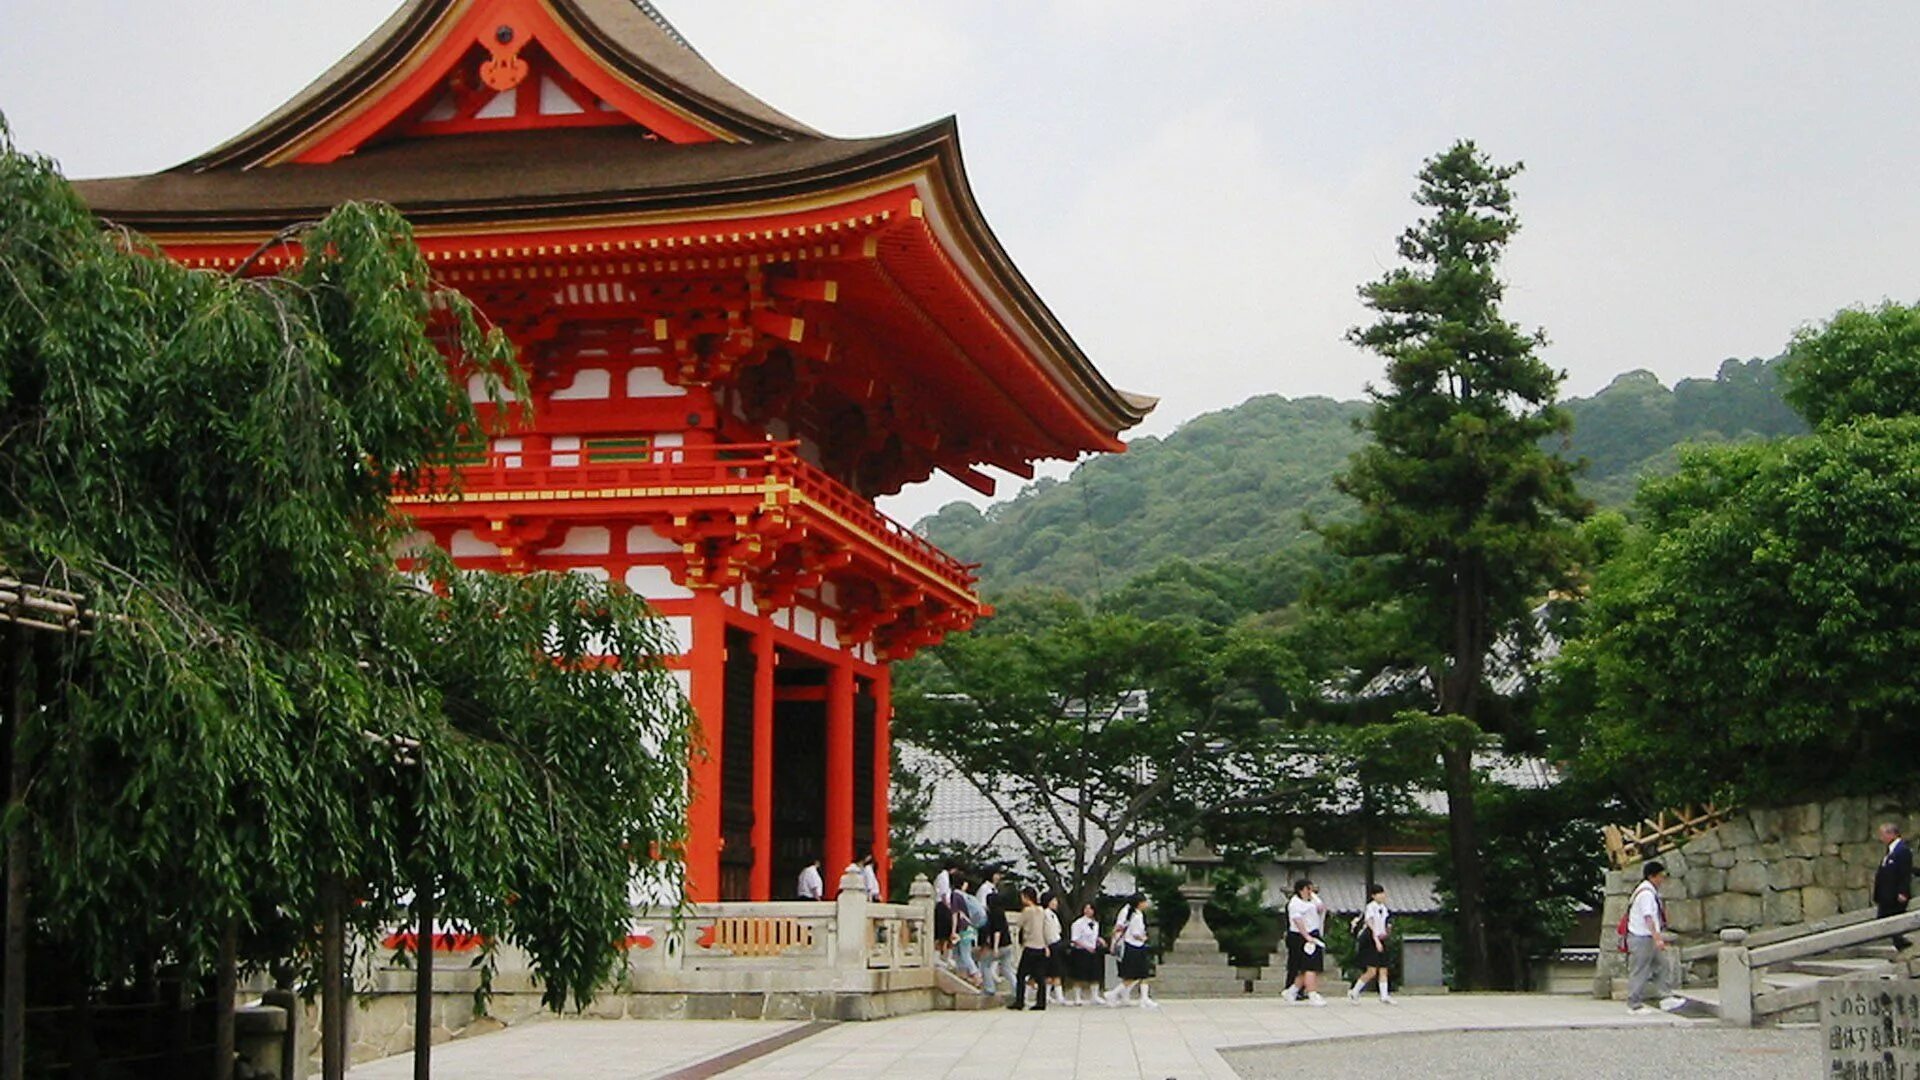 Shrine перевод. Исэ Дзингу Япония. Храм Ясака Киото. Киото древняя столица Японии. Синтоизм.